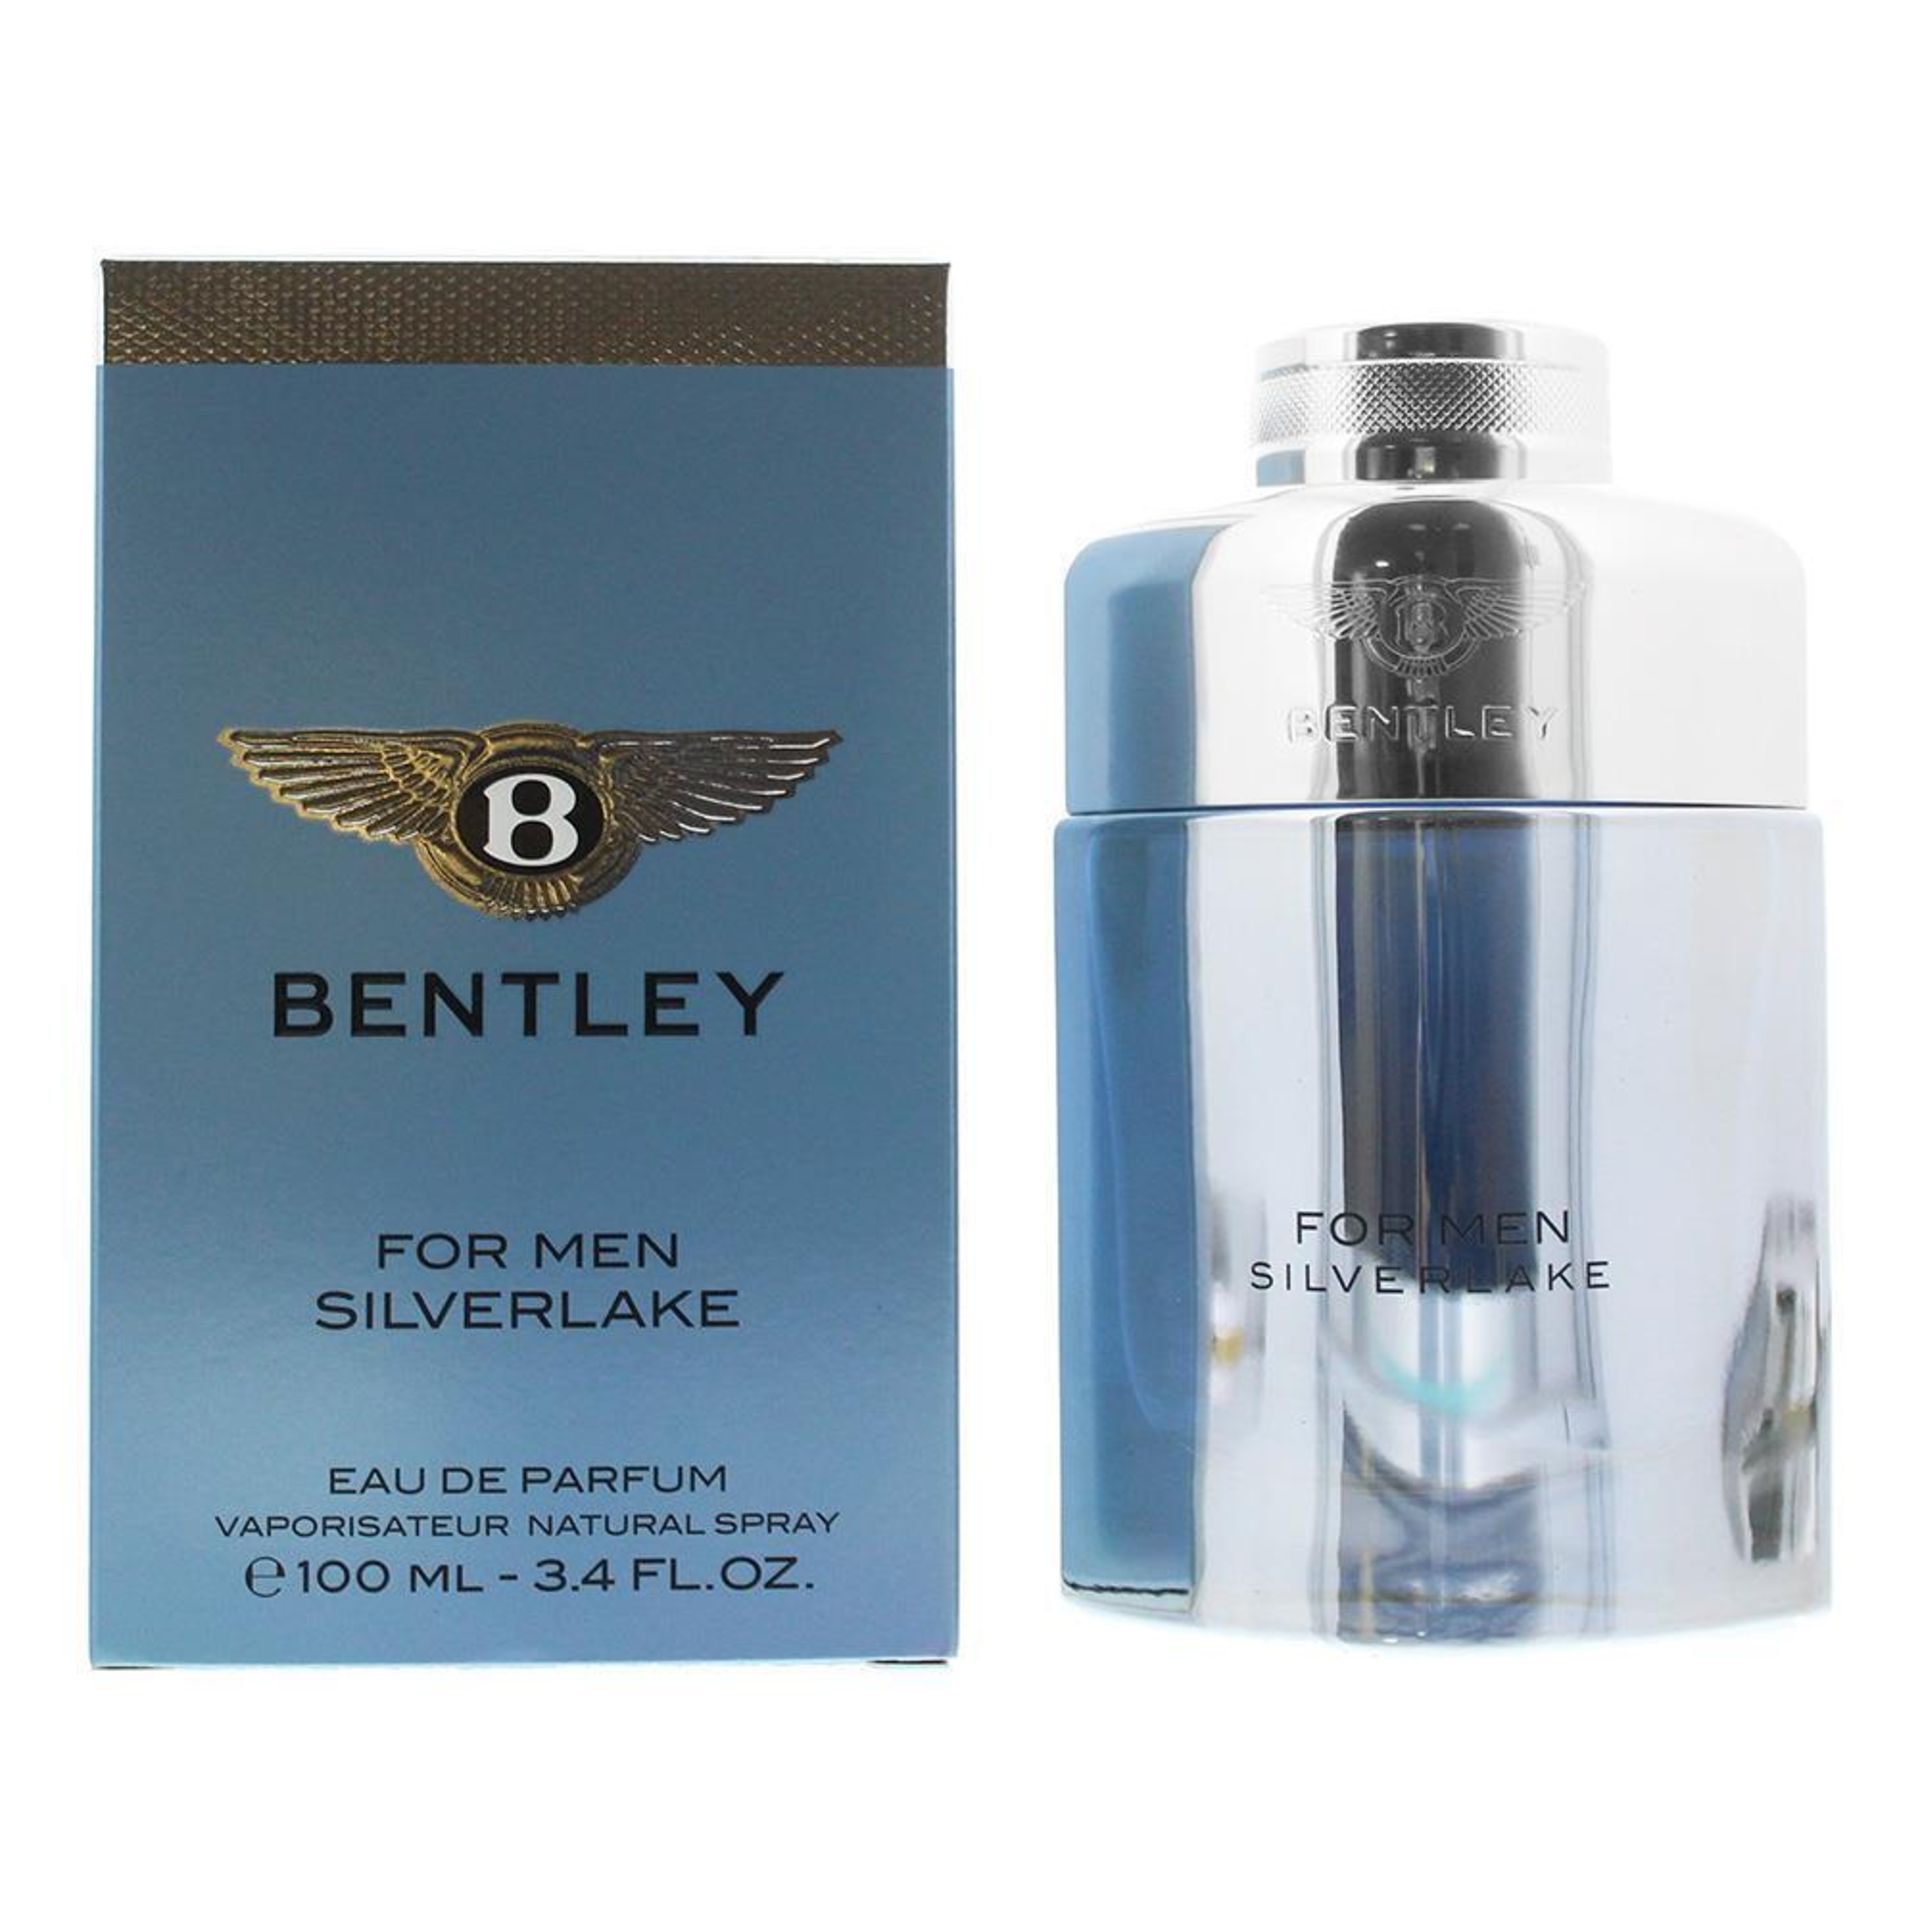 Bentley For Men Silverlake Eau de Parfum 100ml Spray - Image 4 of 6